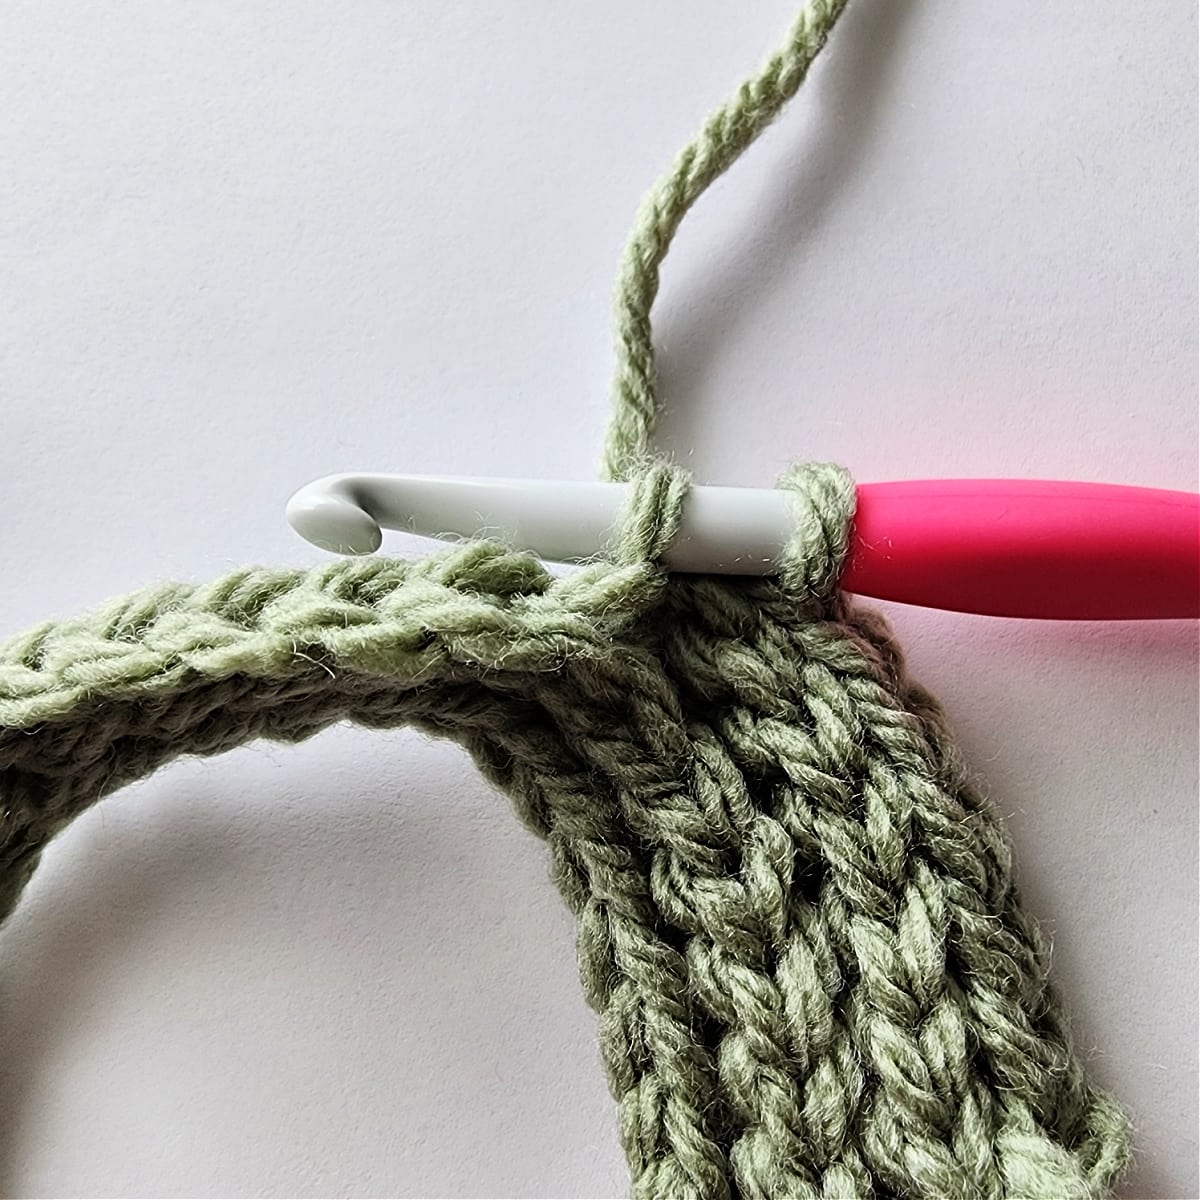 crochet mitten thumb gusset tutorial photo 6